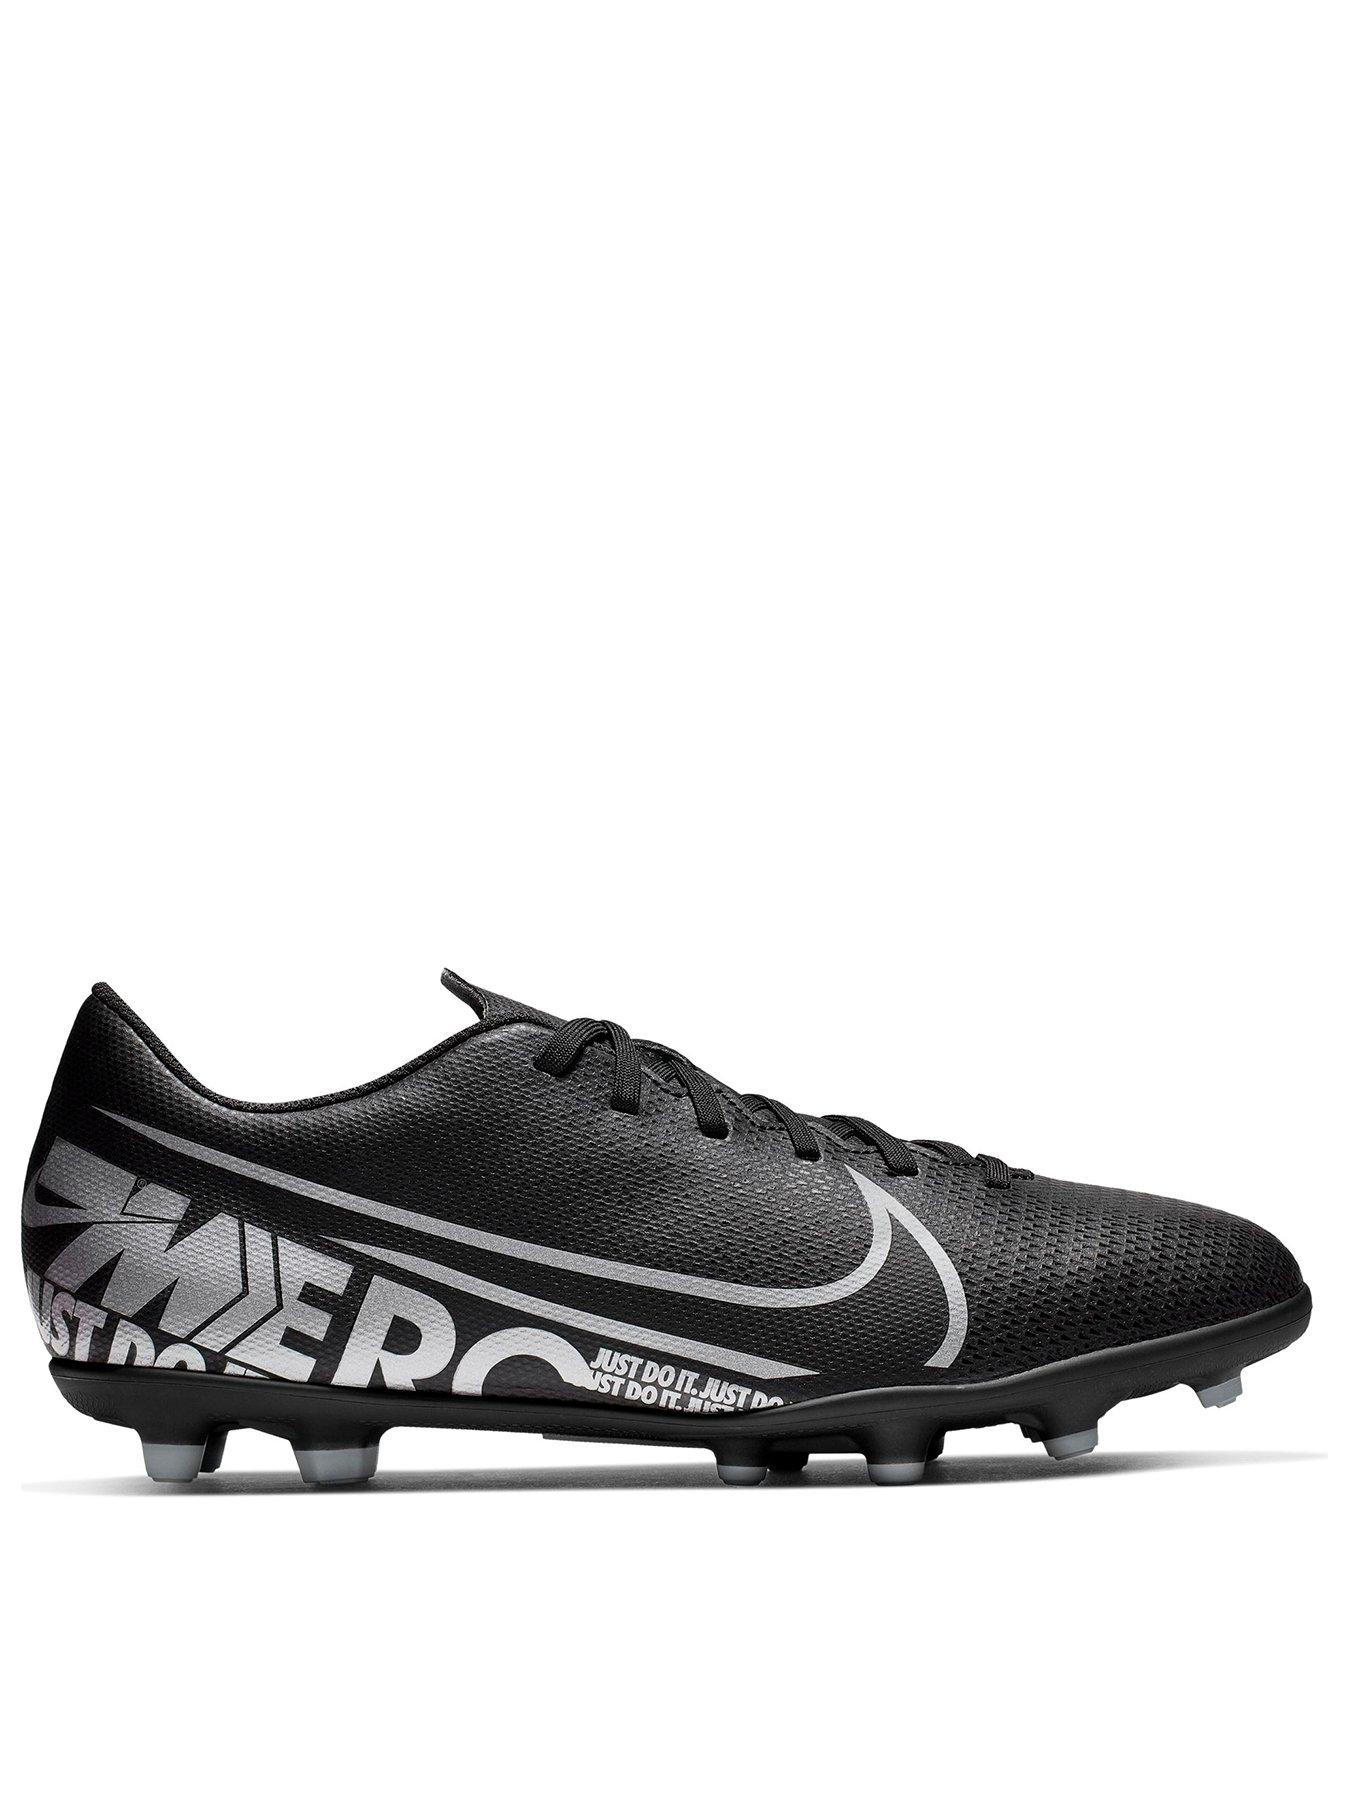 black nike vapour football boots